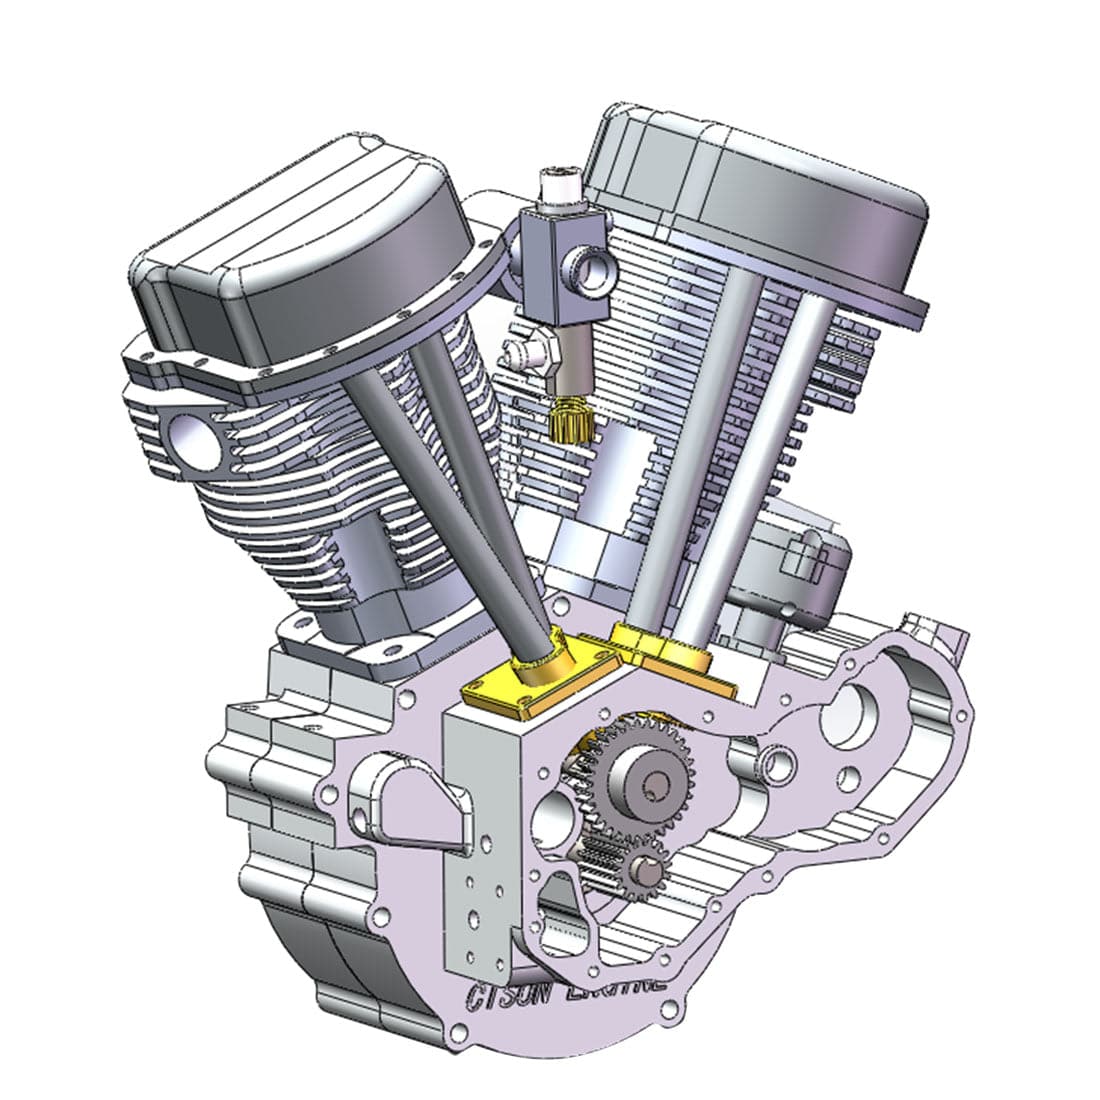 CISON FG-VT9 9cc V-twin V2 Engine Four-stroke Air-cooled Motorcycle RC Gasoline Engine 1